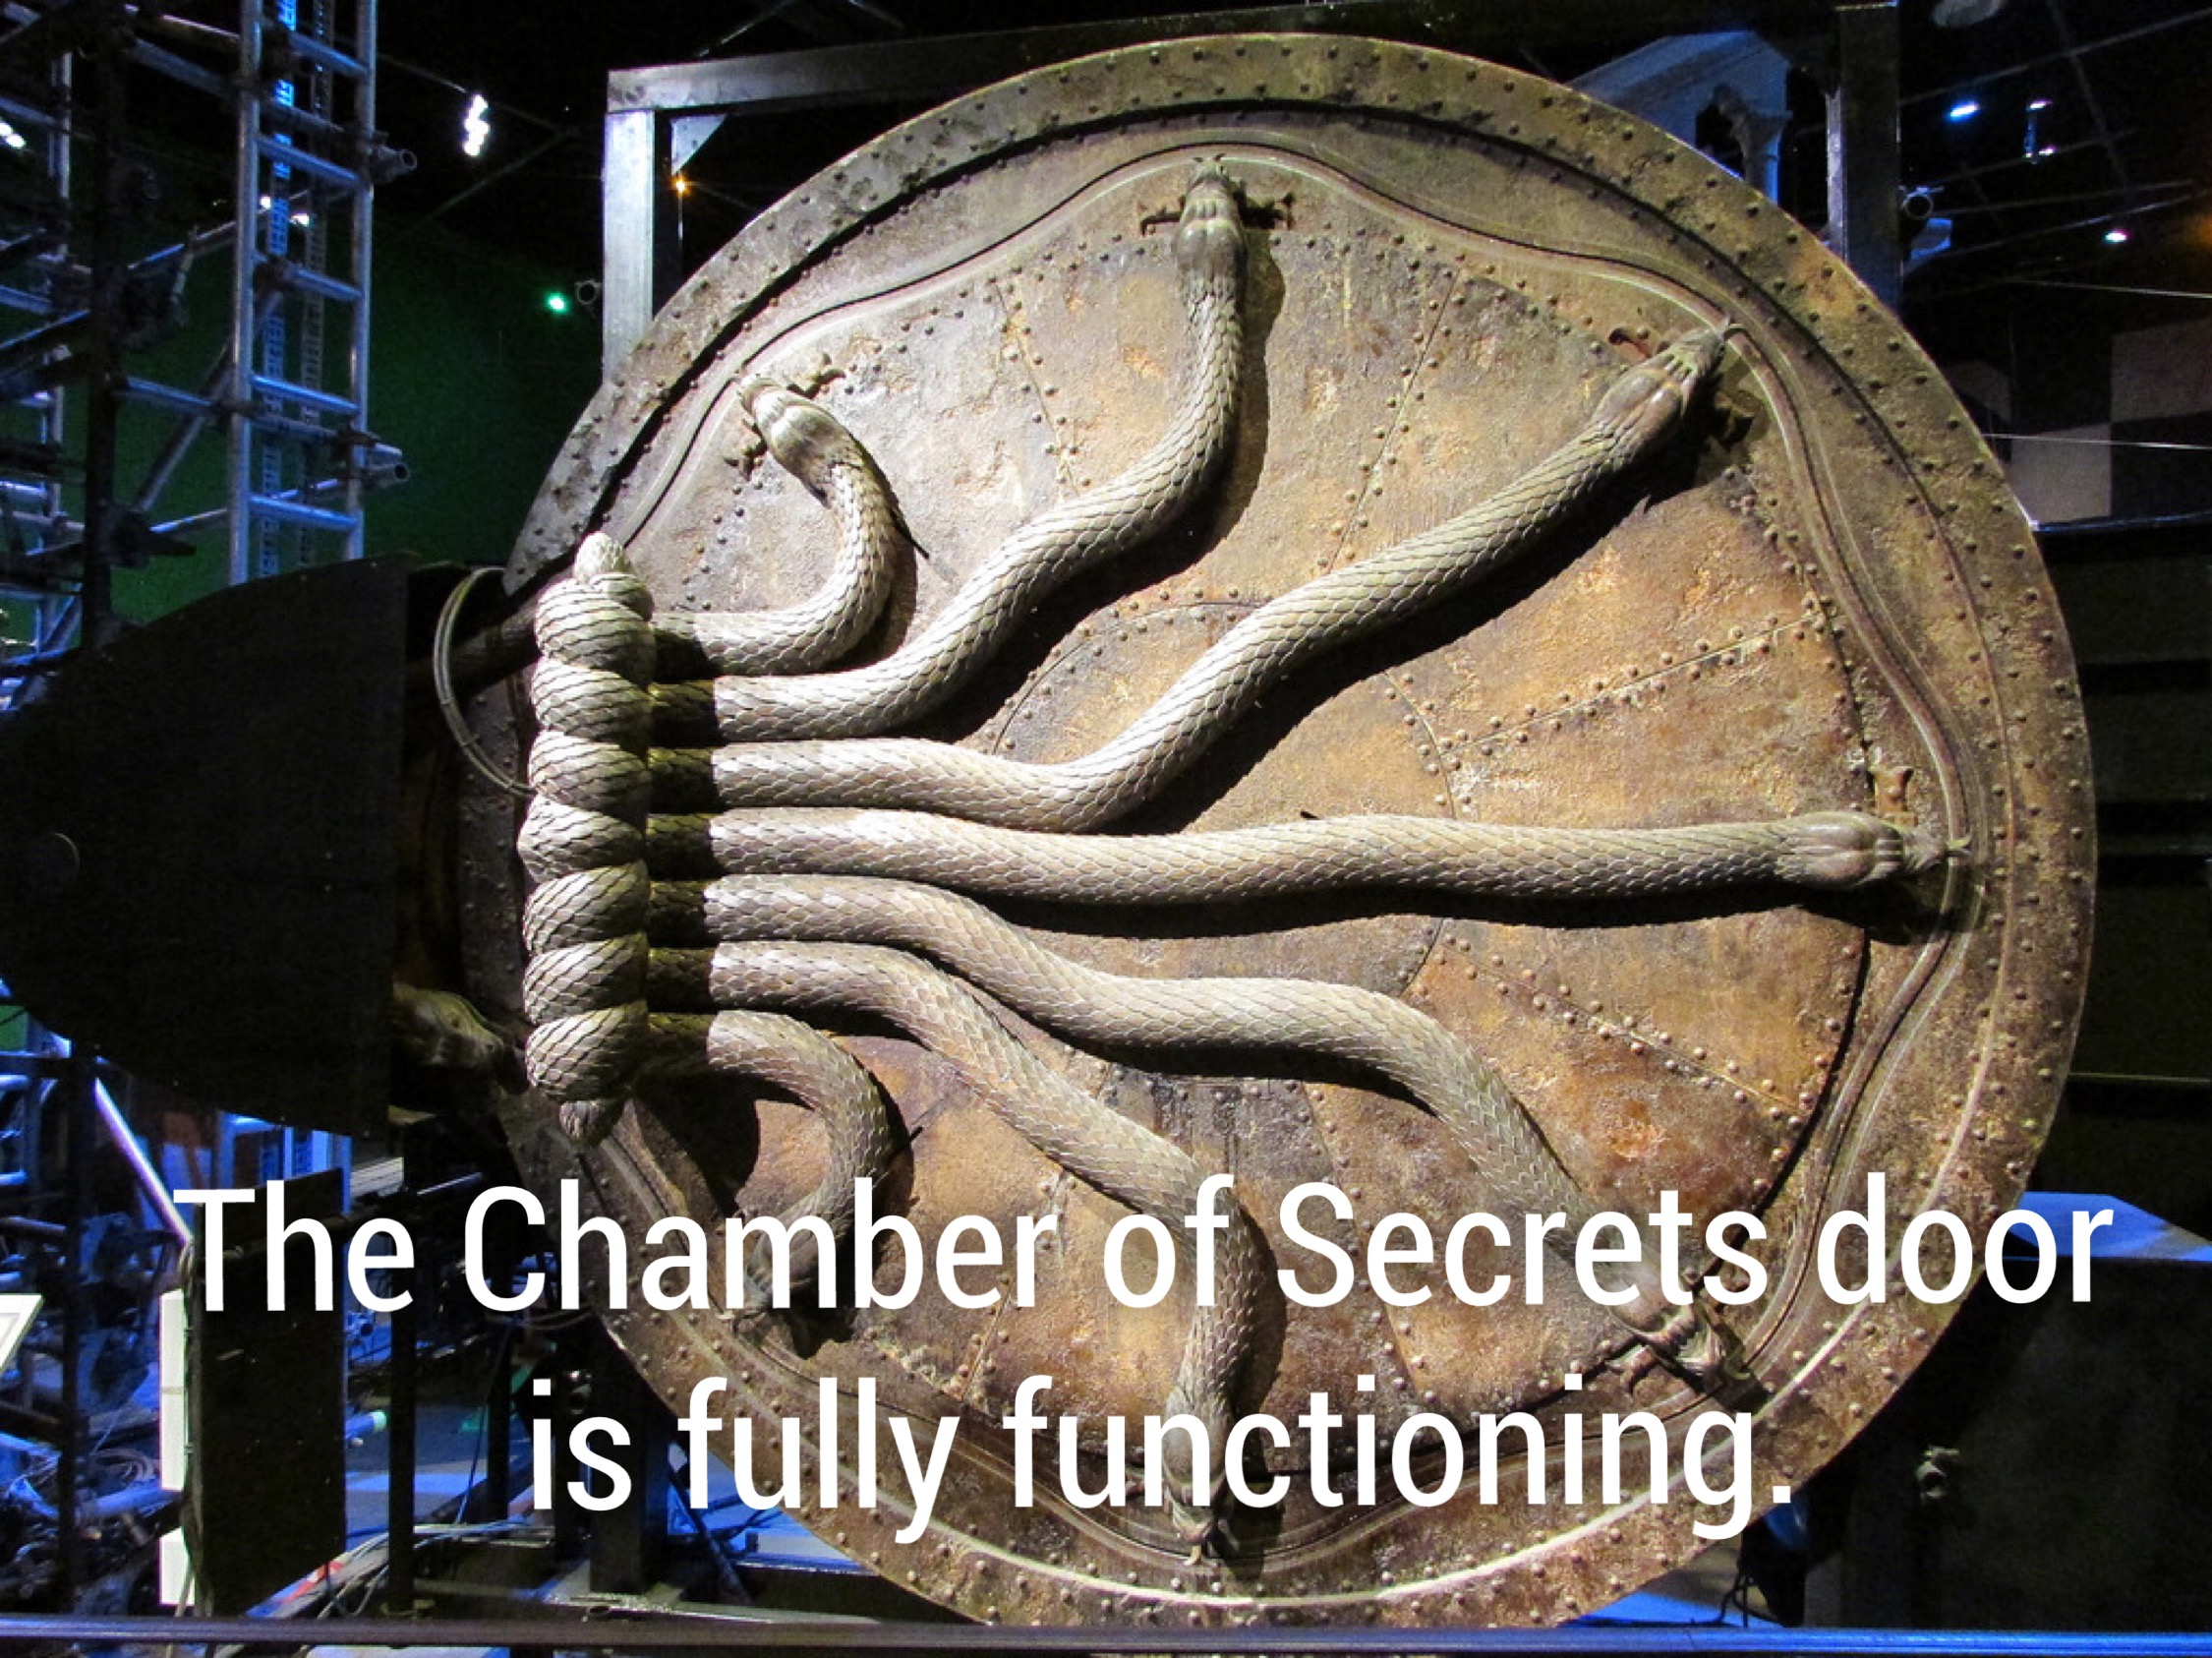 harry potter museum - Lu Chamber of Secrets door Lis fully functioning.